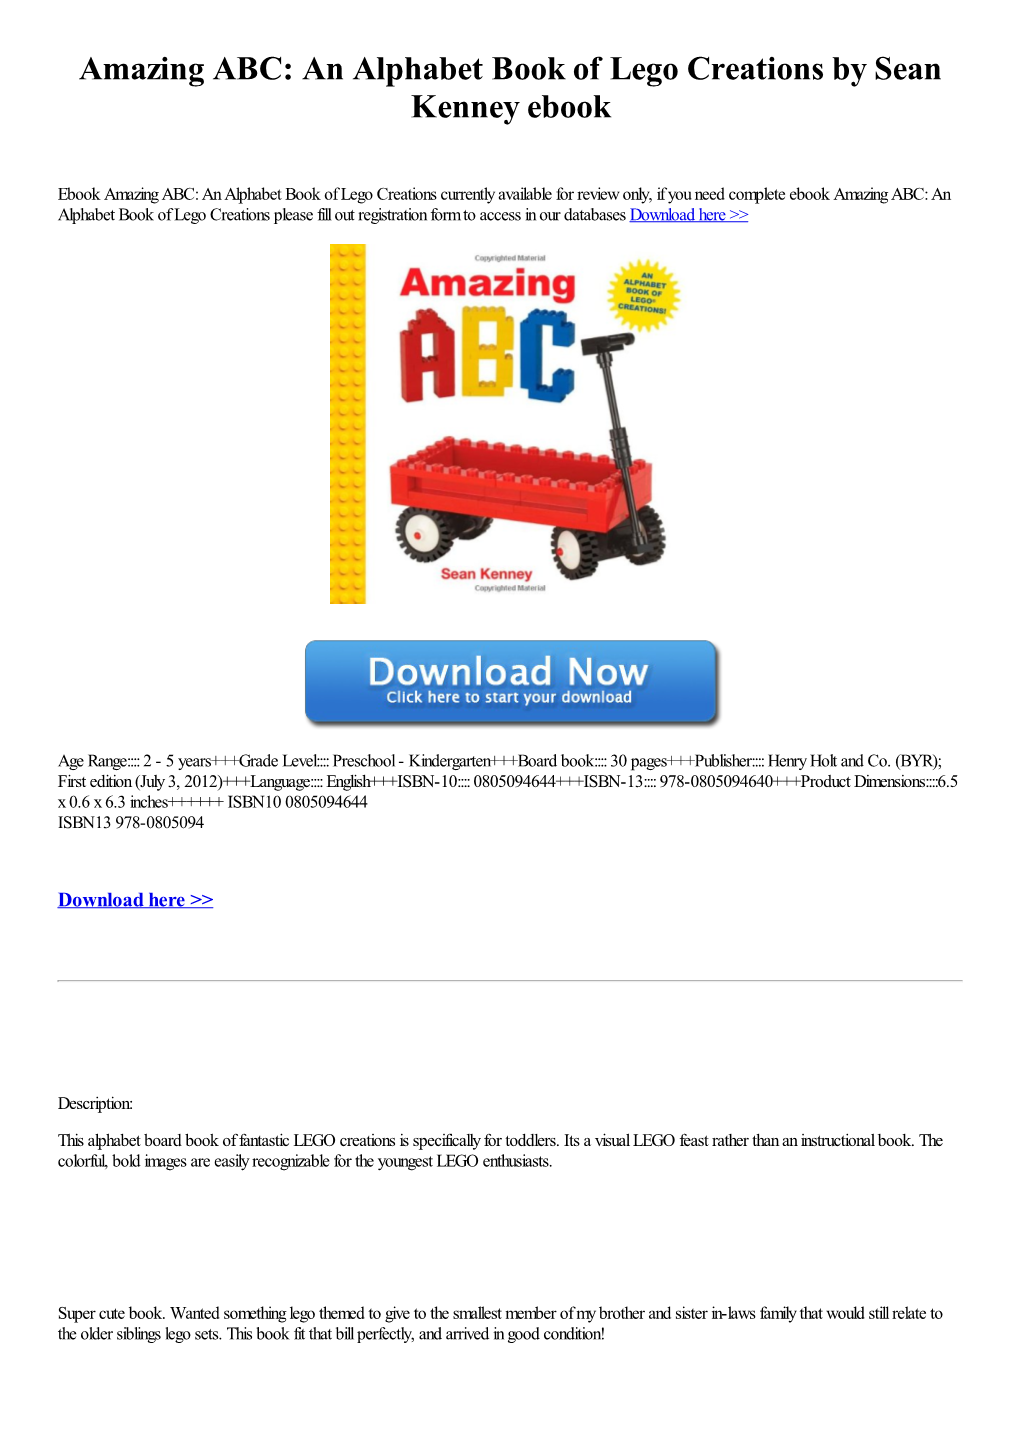 Amazing ABC: an Alphabet Book of Lego Creations by Sean Kenney Ebook